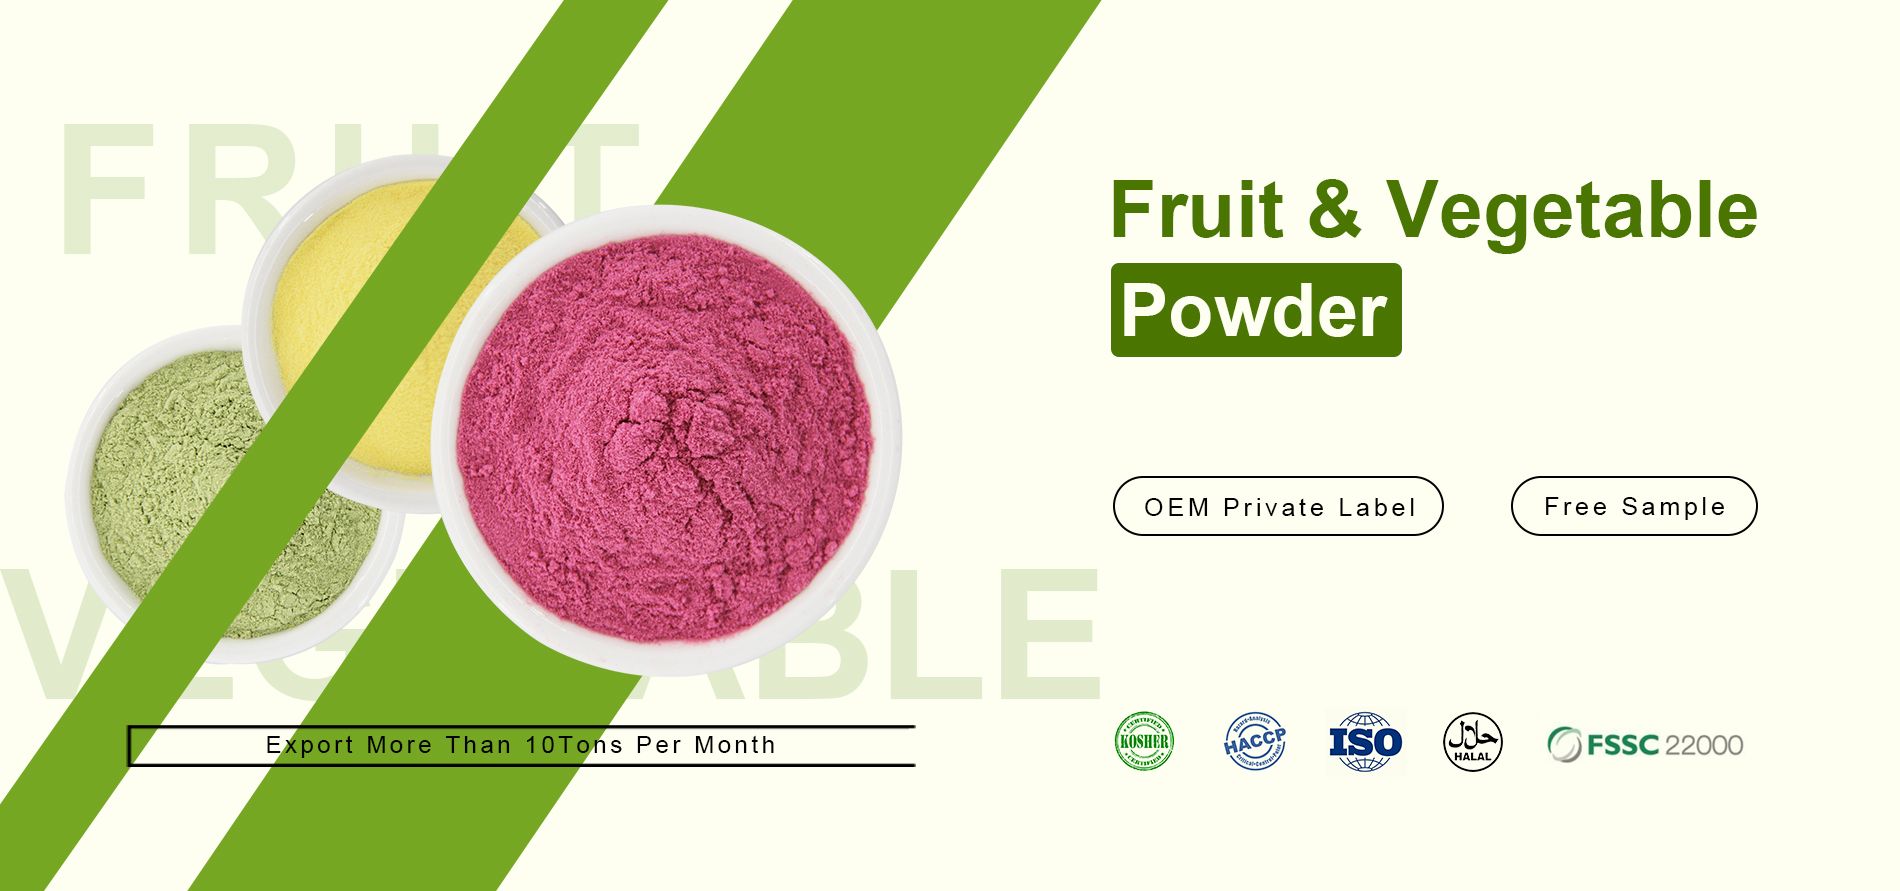 Hot selling Fruit-vegetable Powder